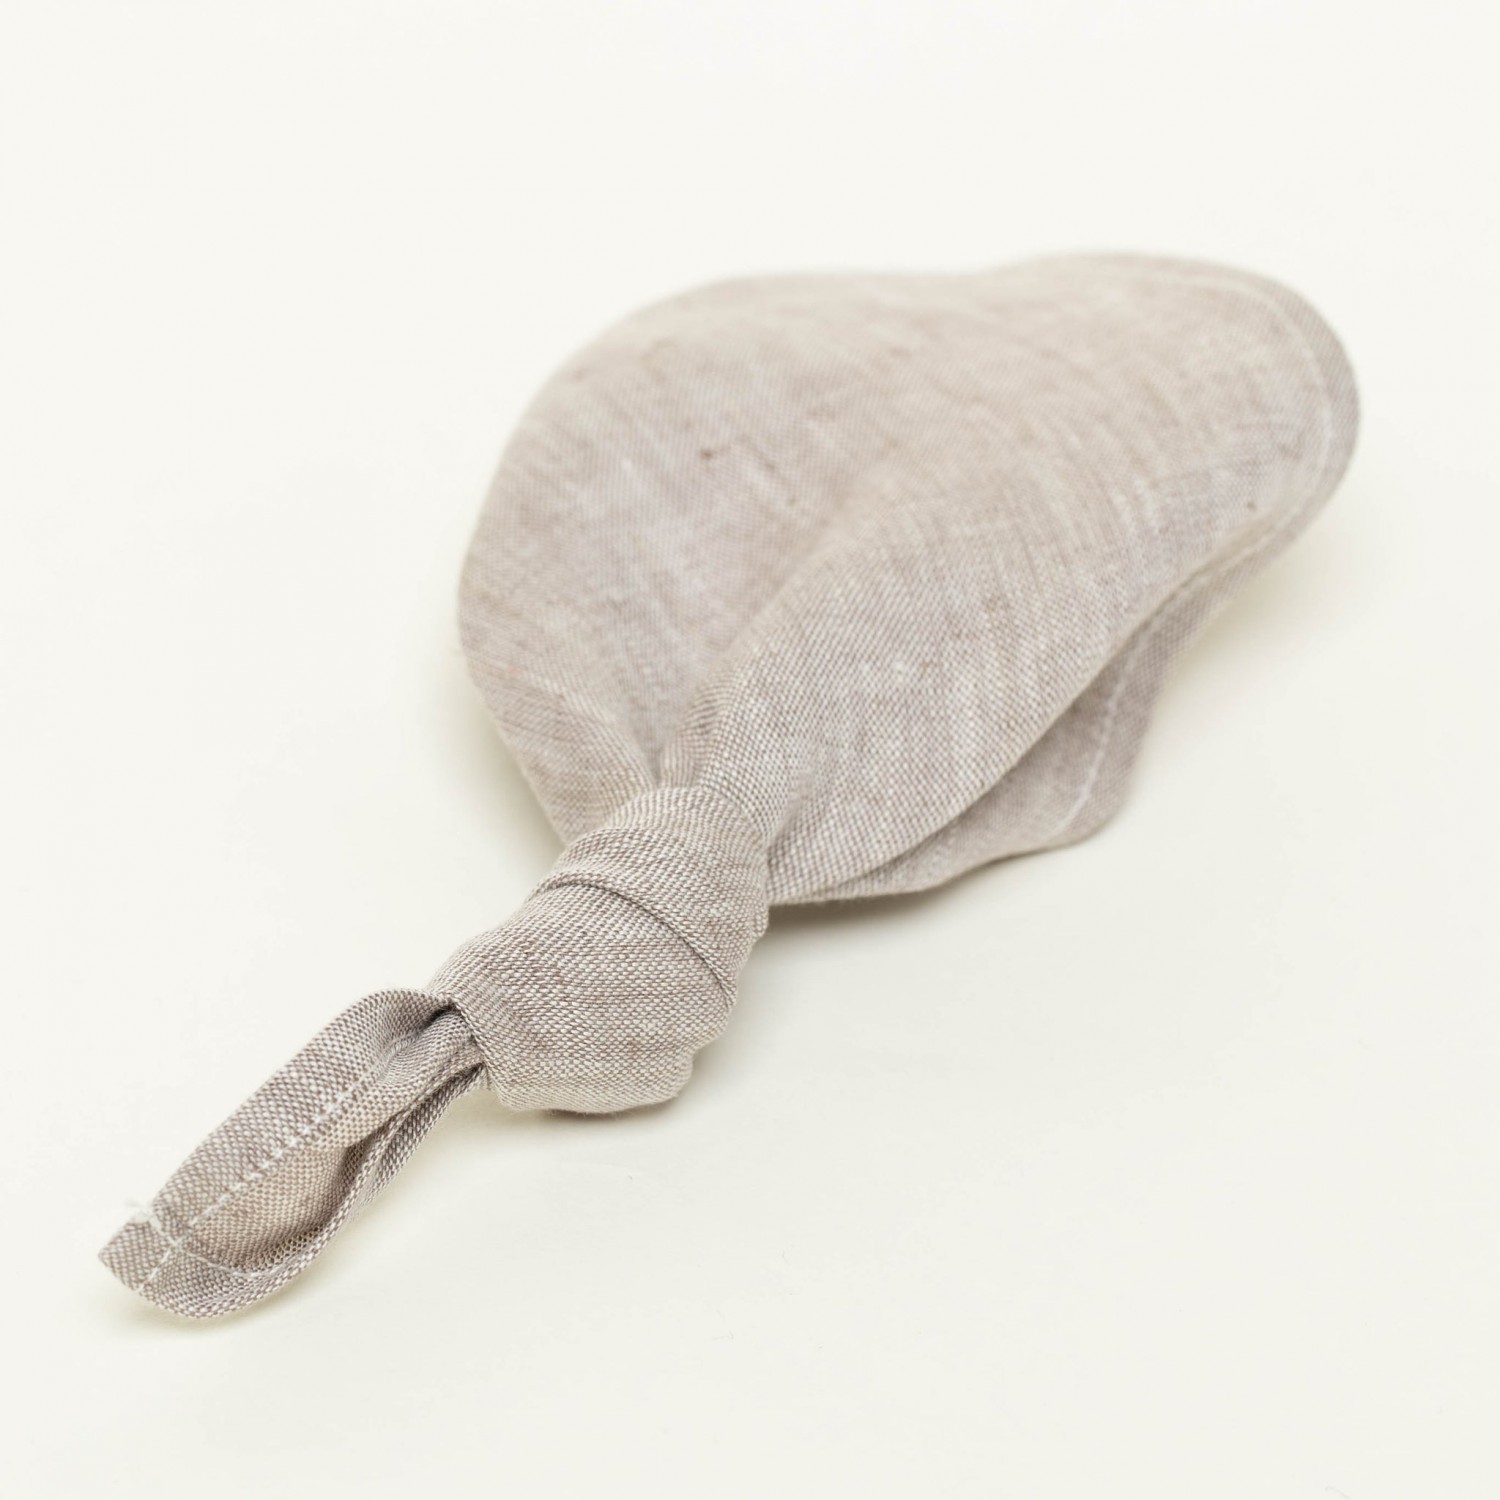 Handkerchief Organic Linen for women & men » nahtur-design